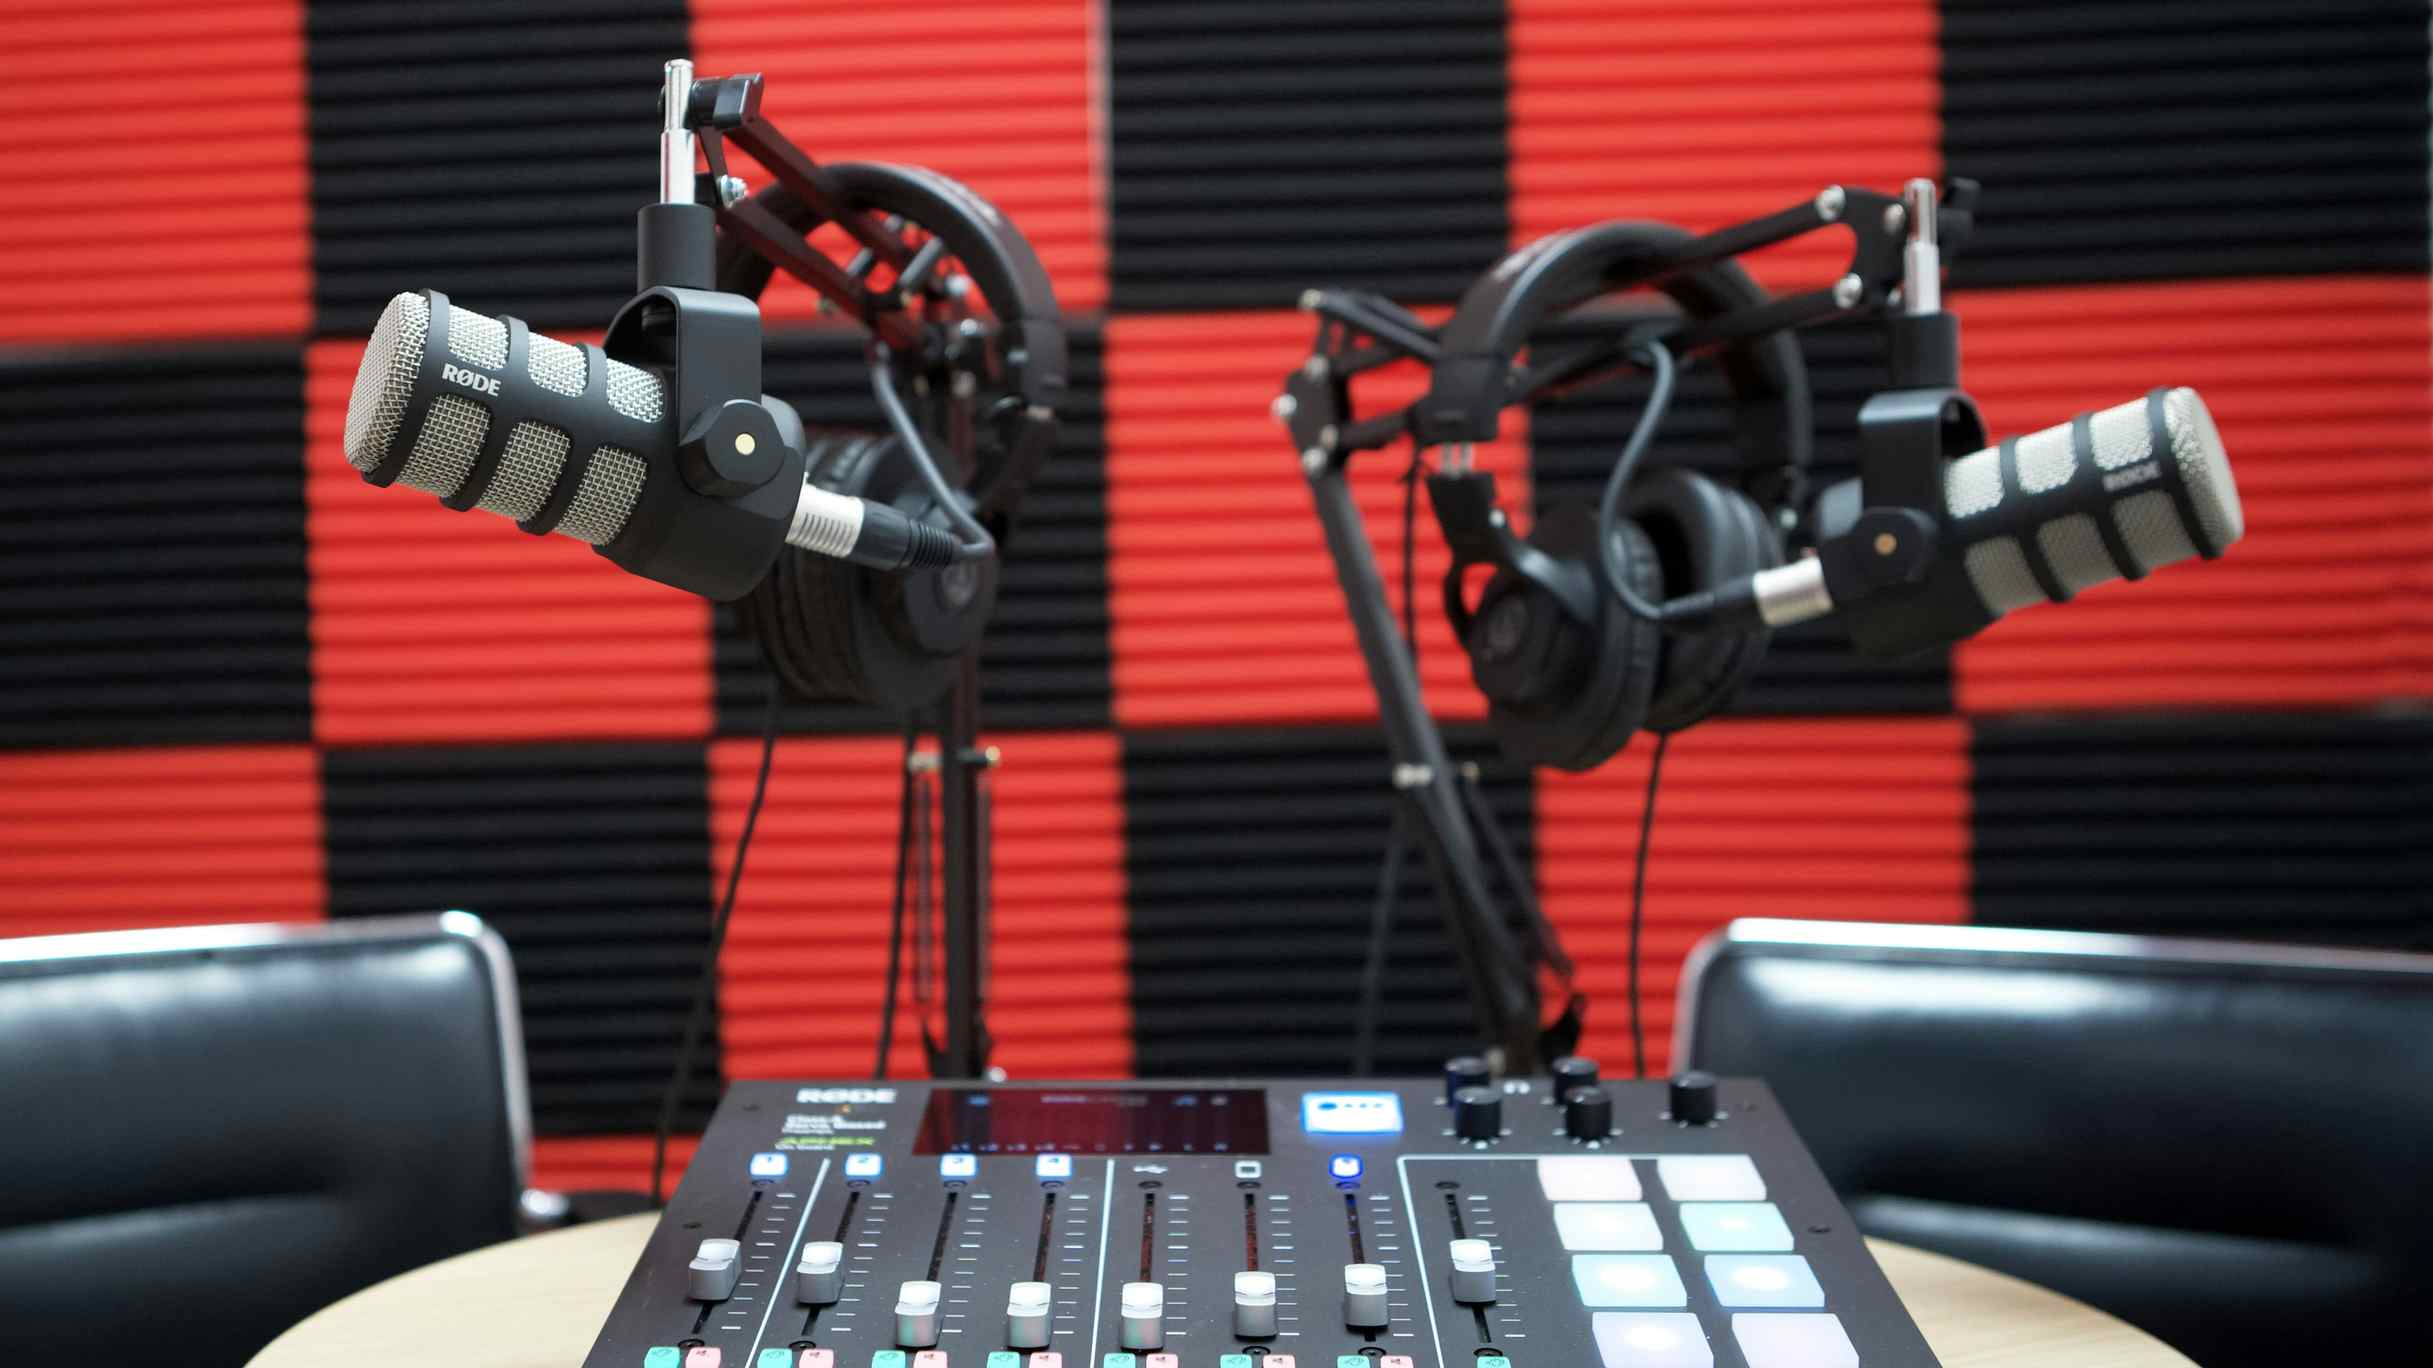 Red Record Podcast Studio, Impact Brixton